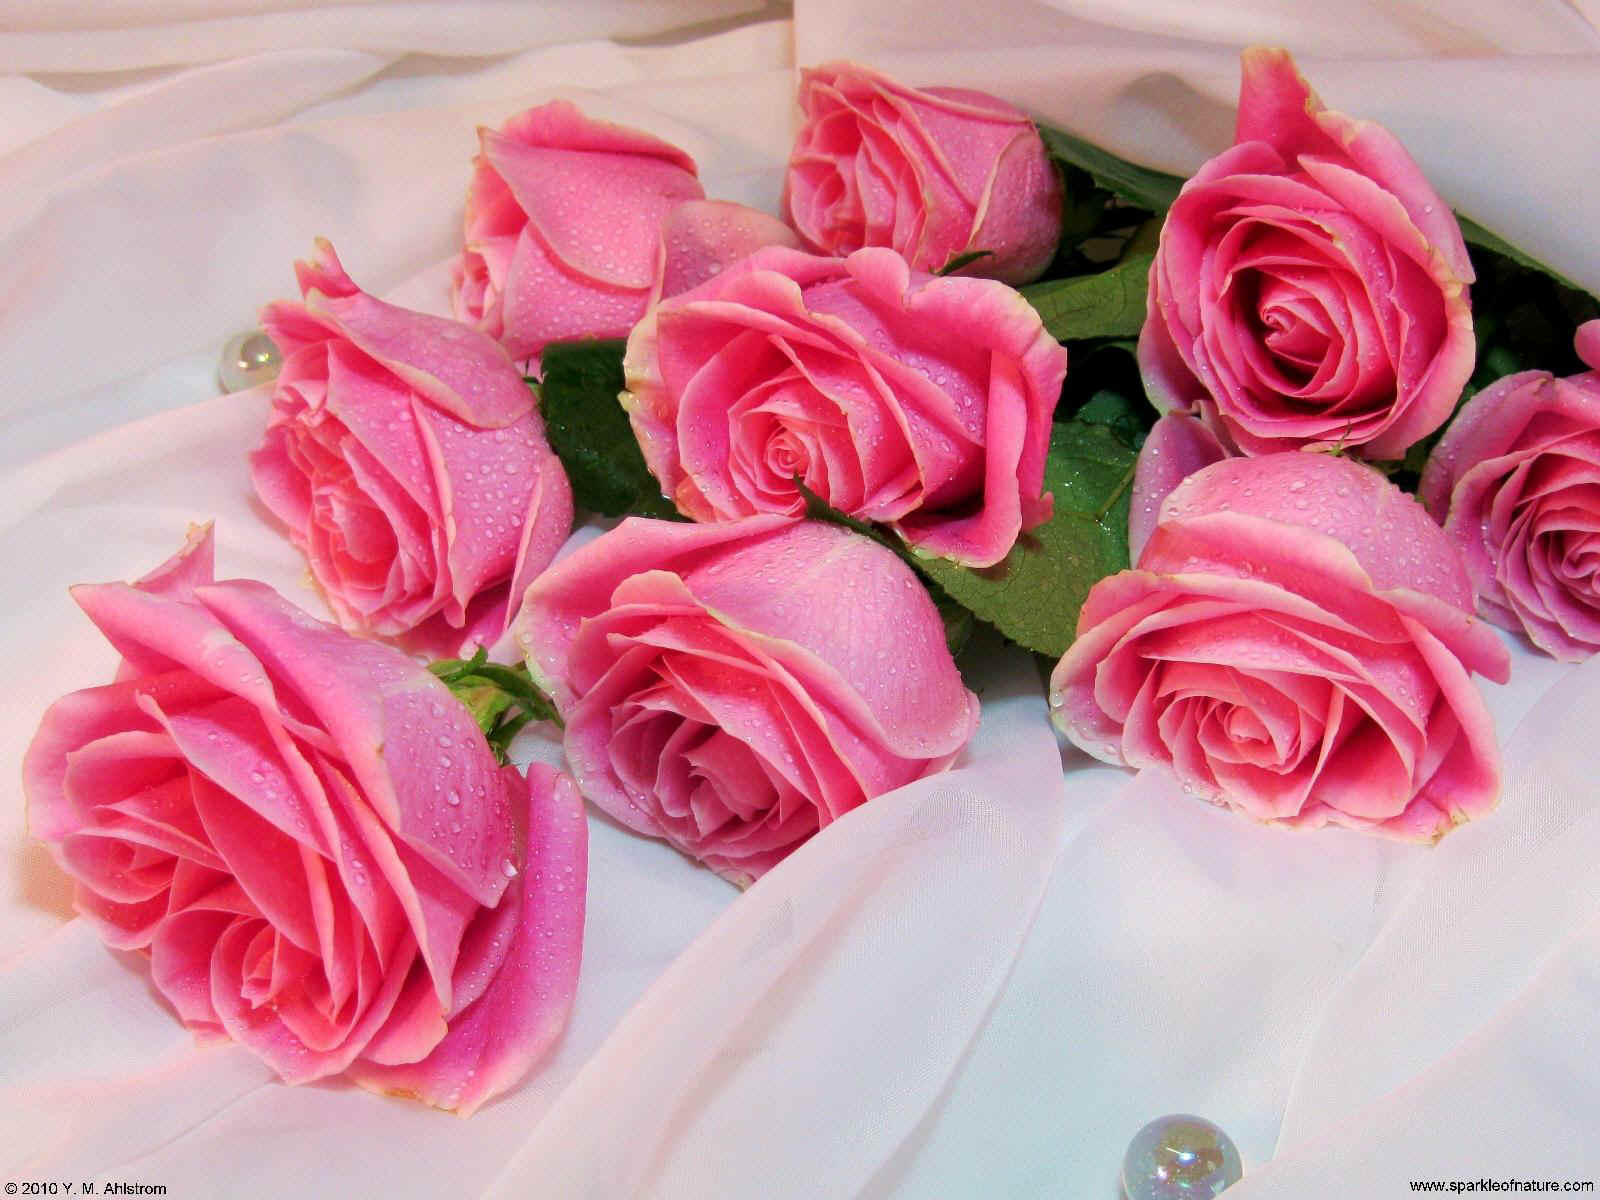 17420_pink_roses_1600x1200.jpg